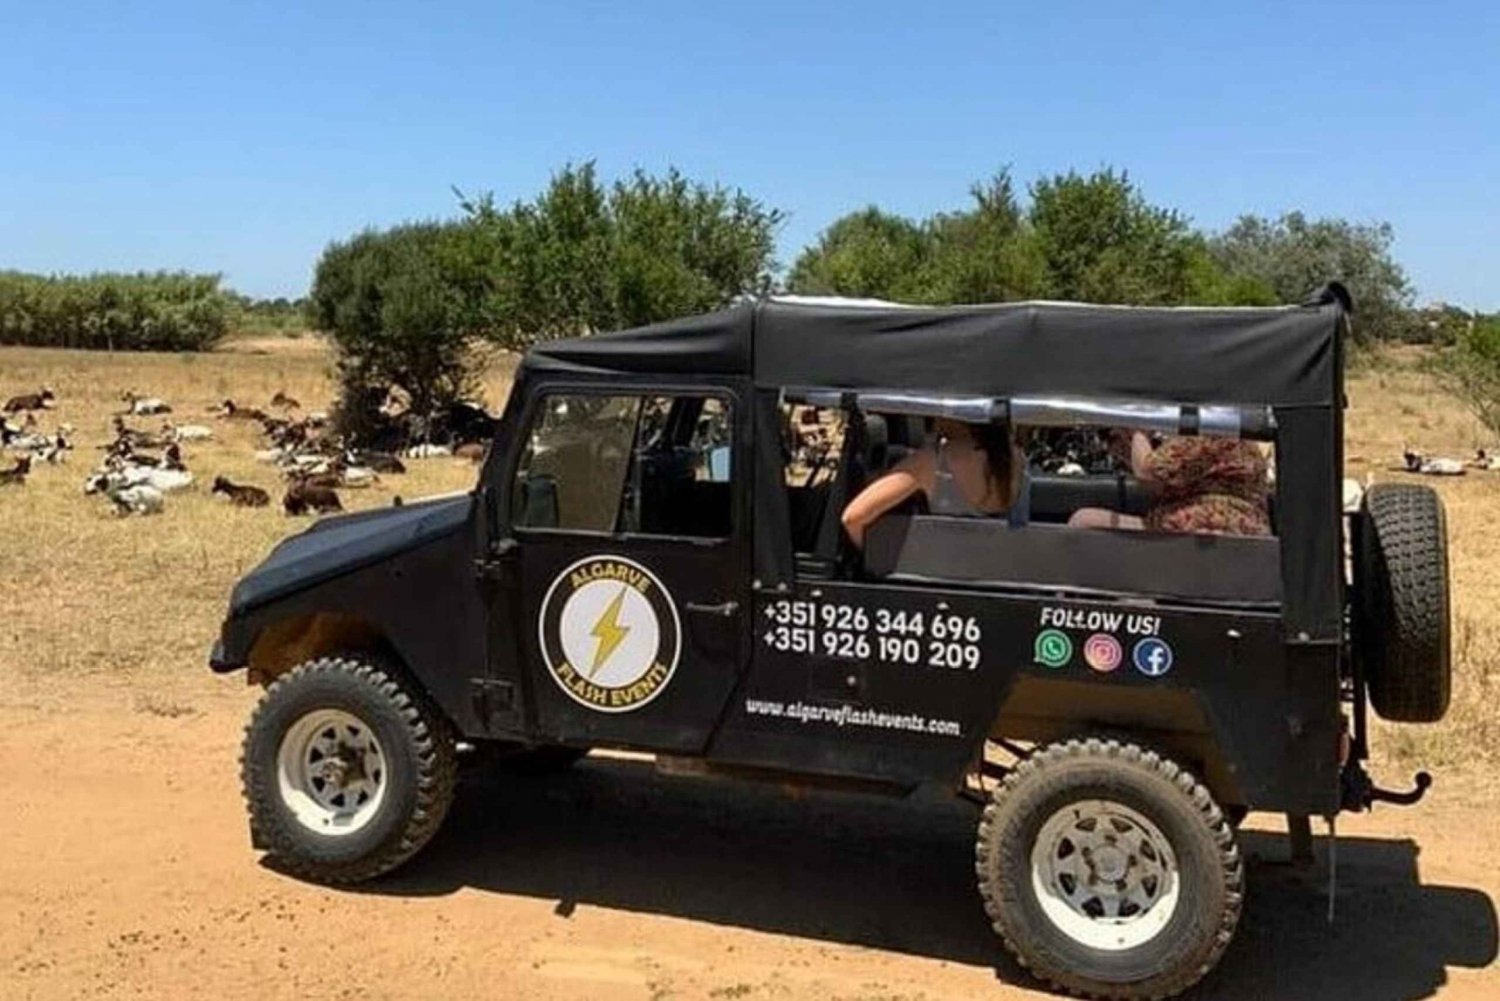 Albufeira Safari Tour met entree in Krazy World